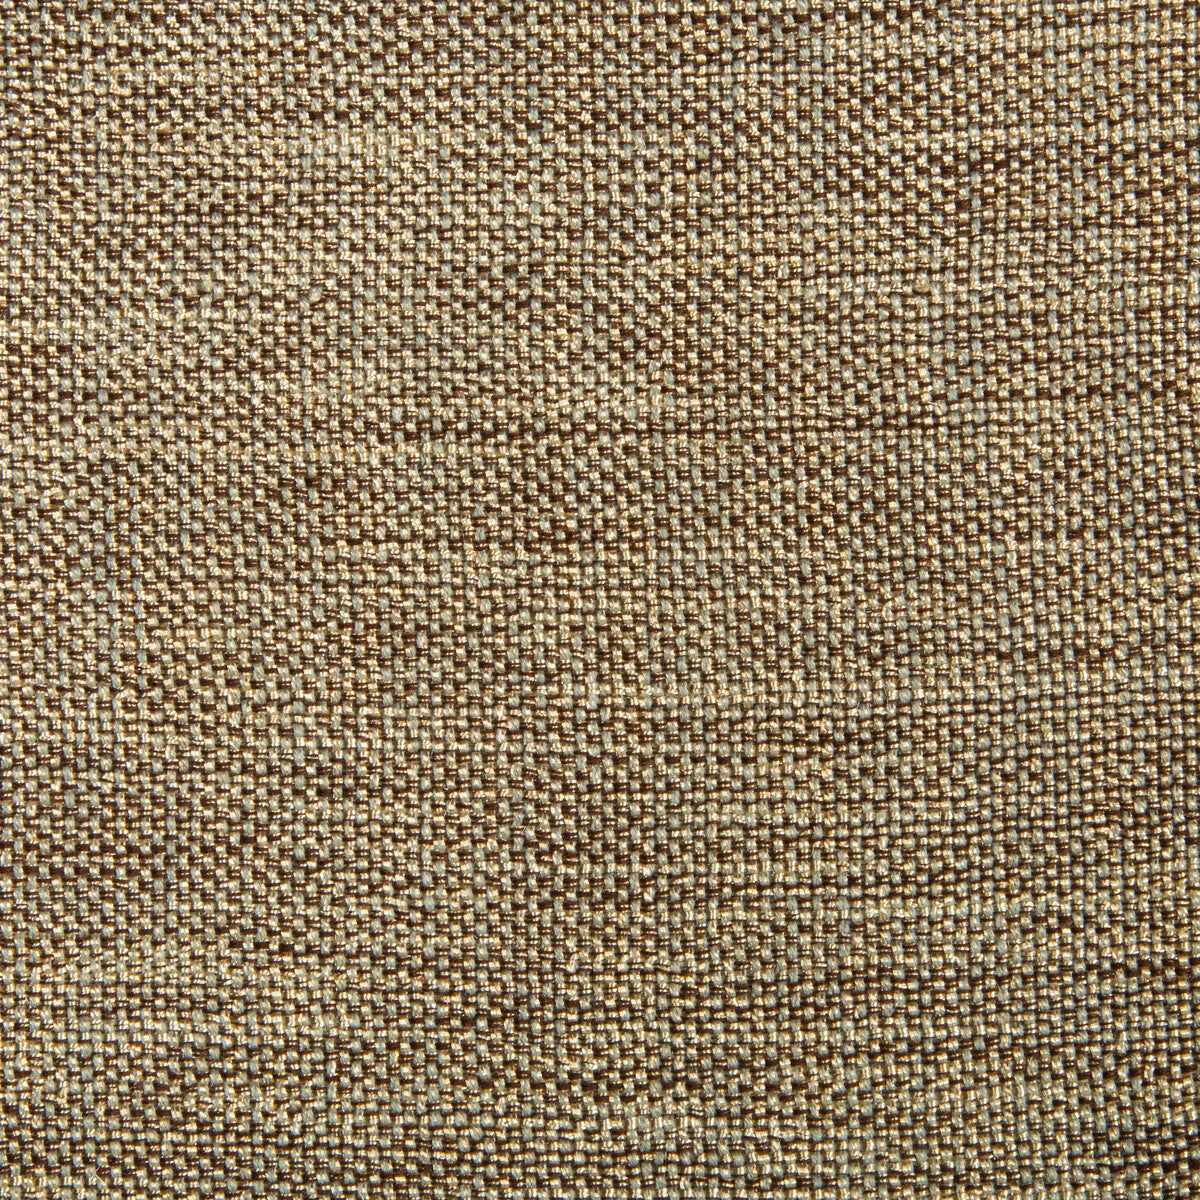 Kravet Smart fabric in 34939-621 color - pattern 34939.621.0 - by Kravet Smart